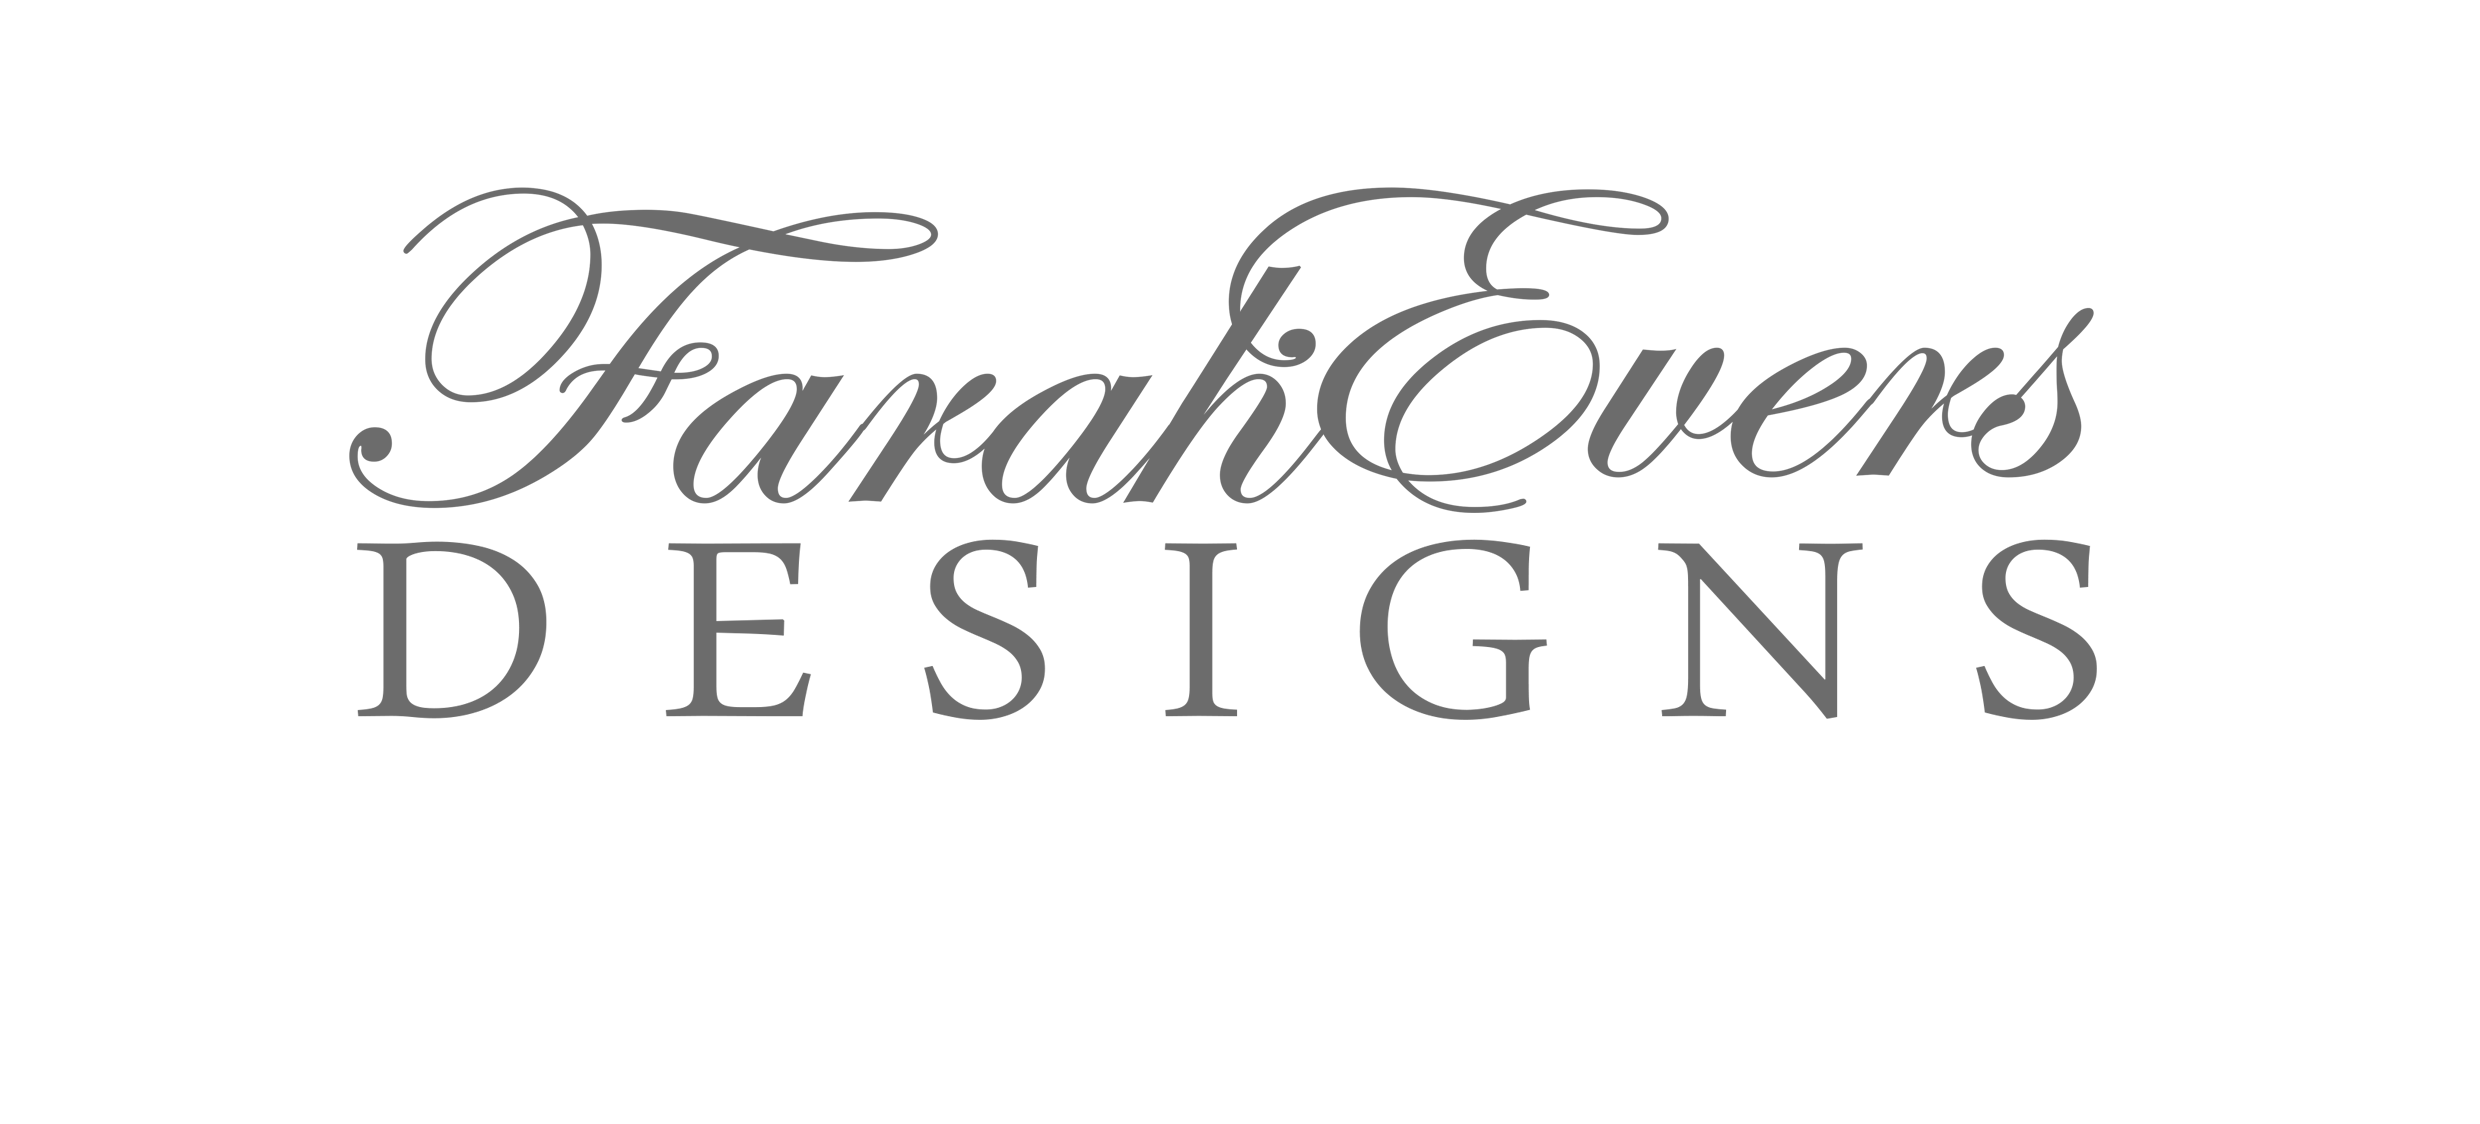 Farah Evers Designs